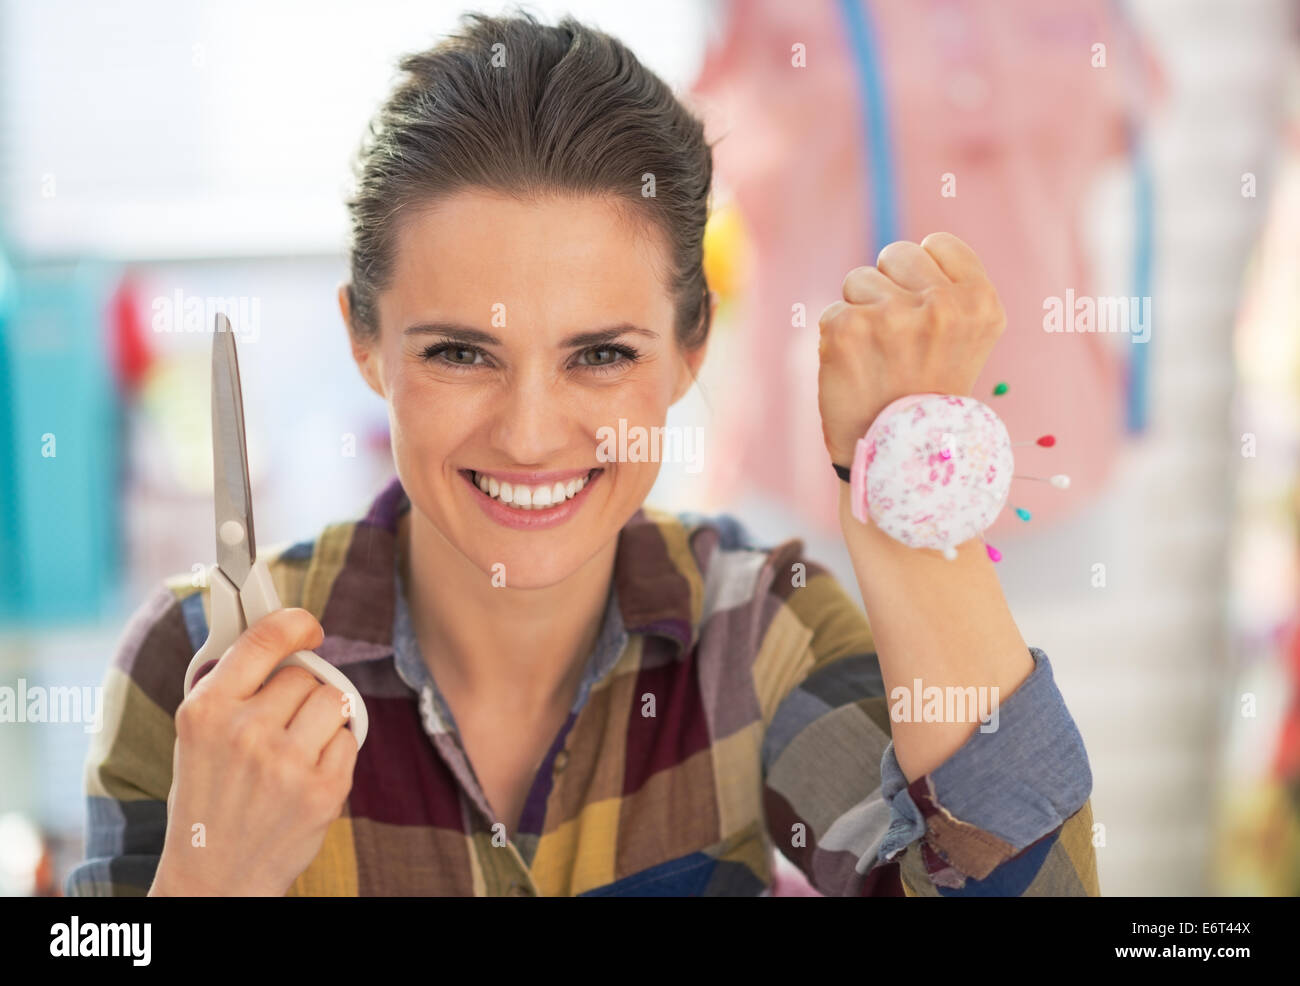 Portrait of dressmaker woman showing scissors and pincushion Stock Photo